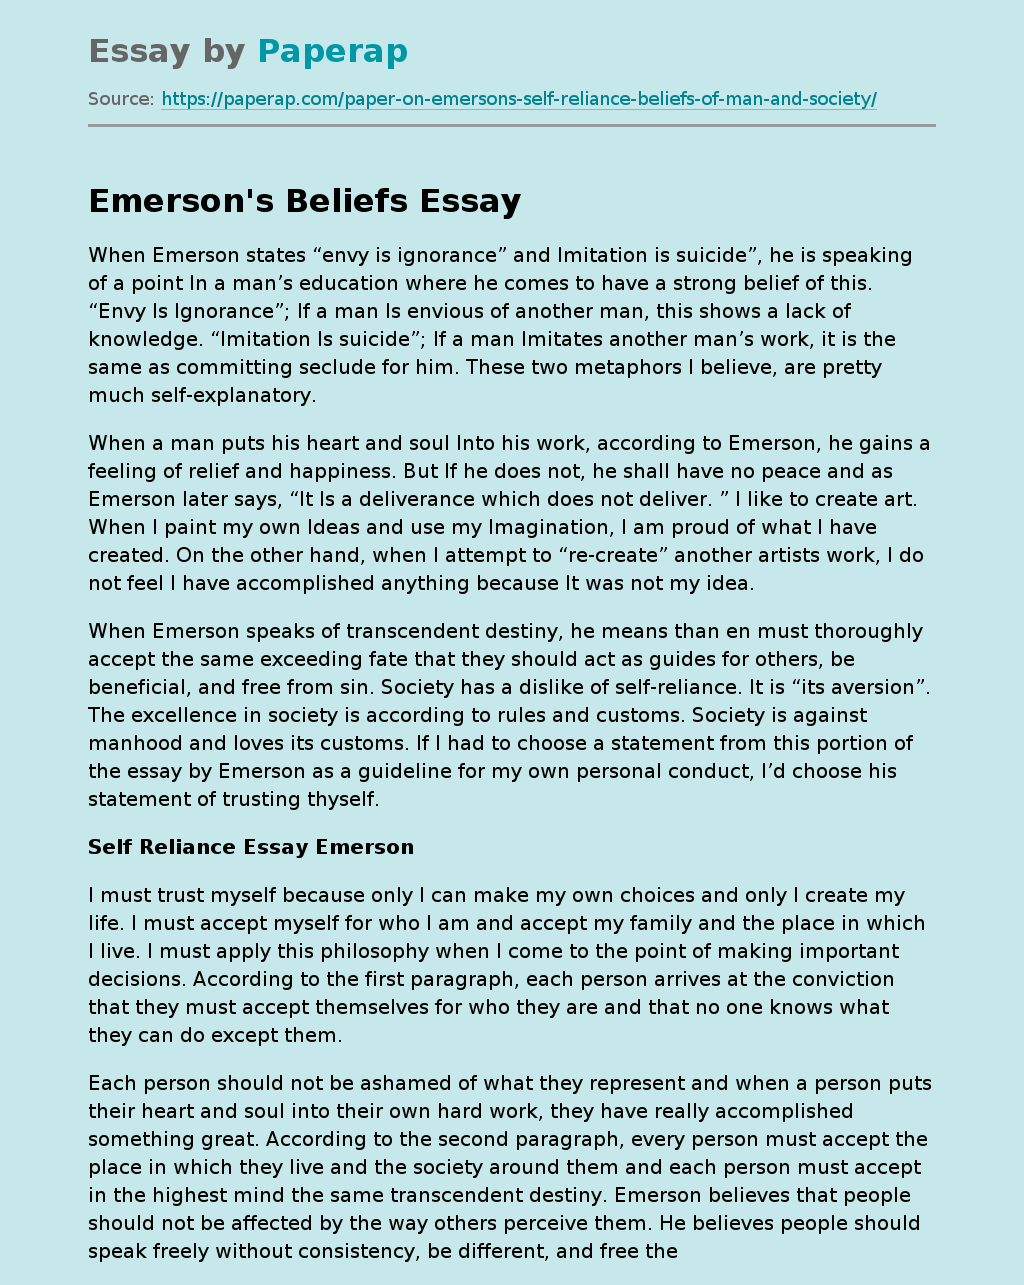 Emerson's Beliefs